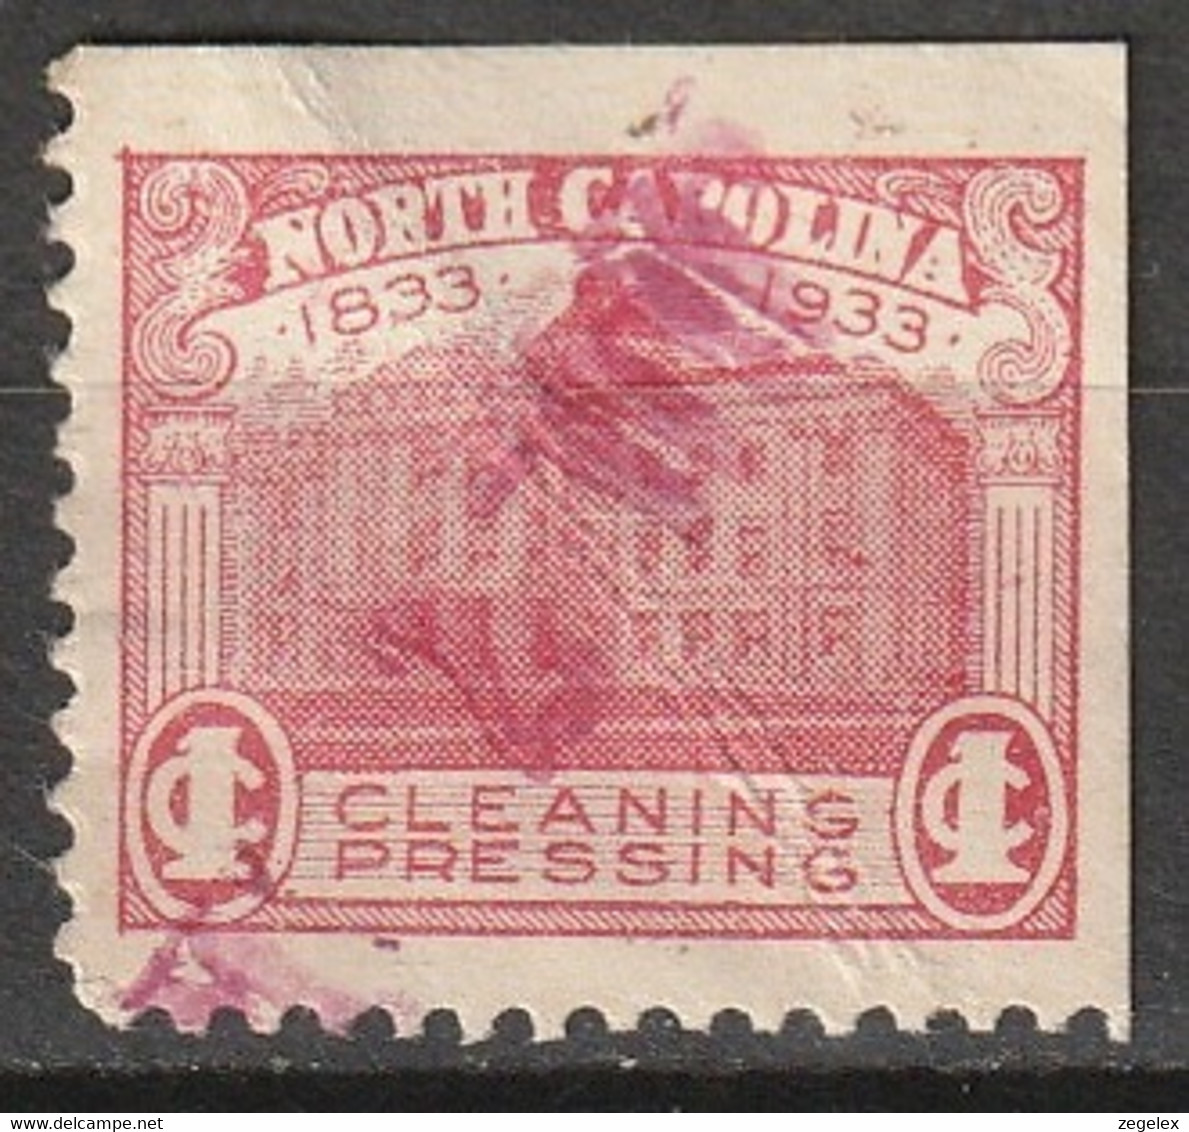 USA 1933 North Carolina Cleaning Pressing 1ct - Steuermarken